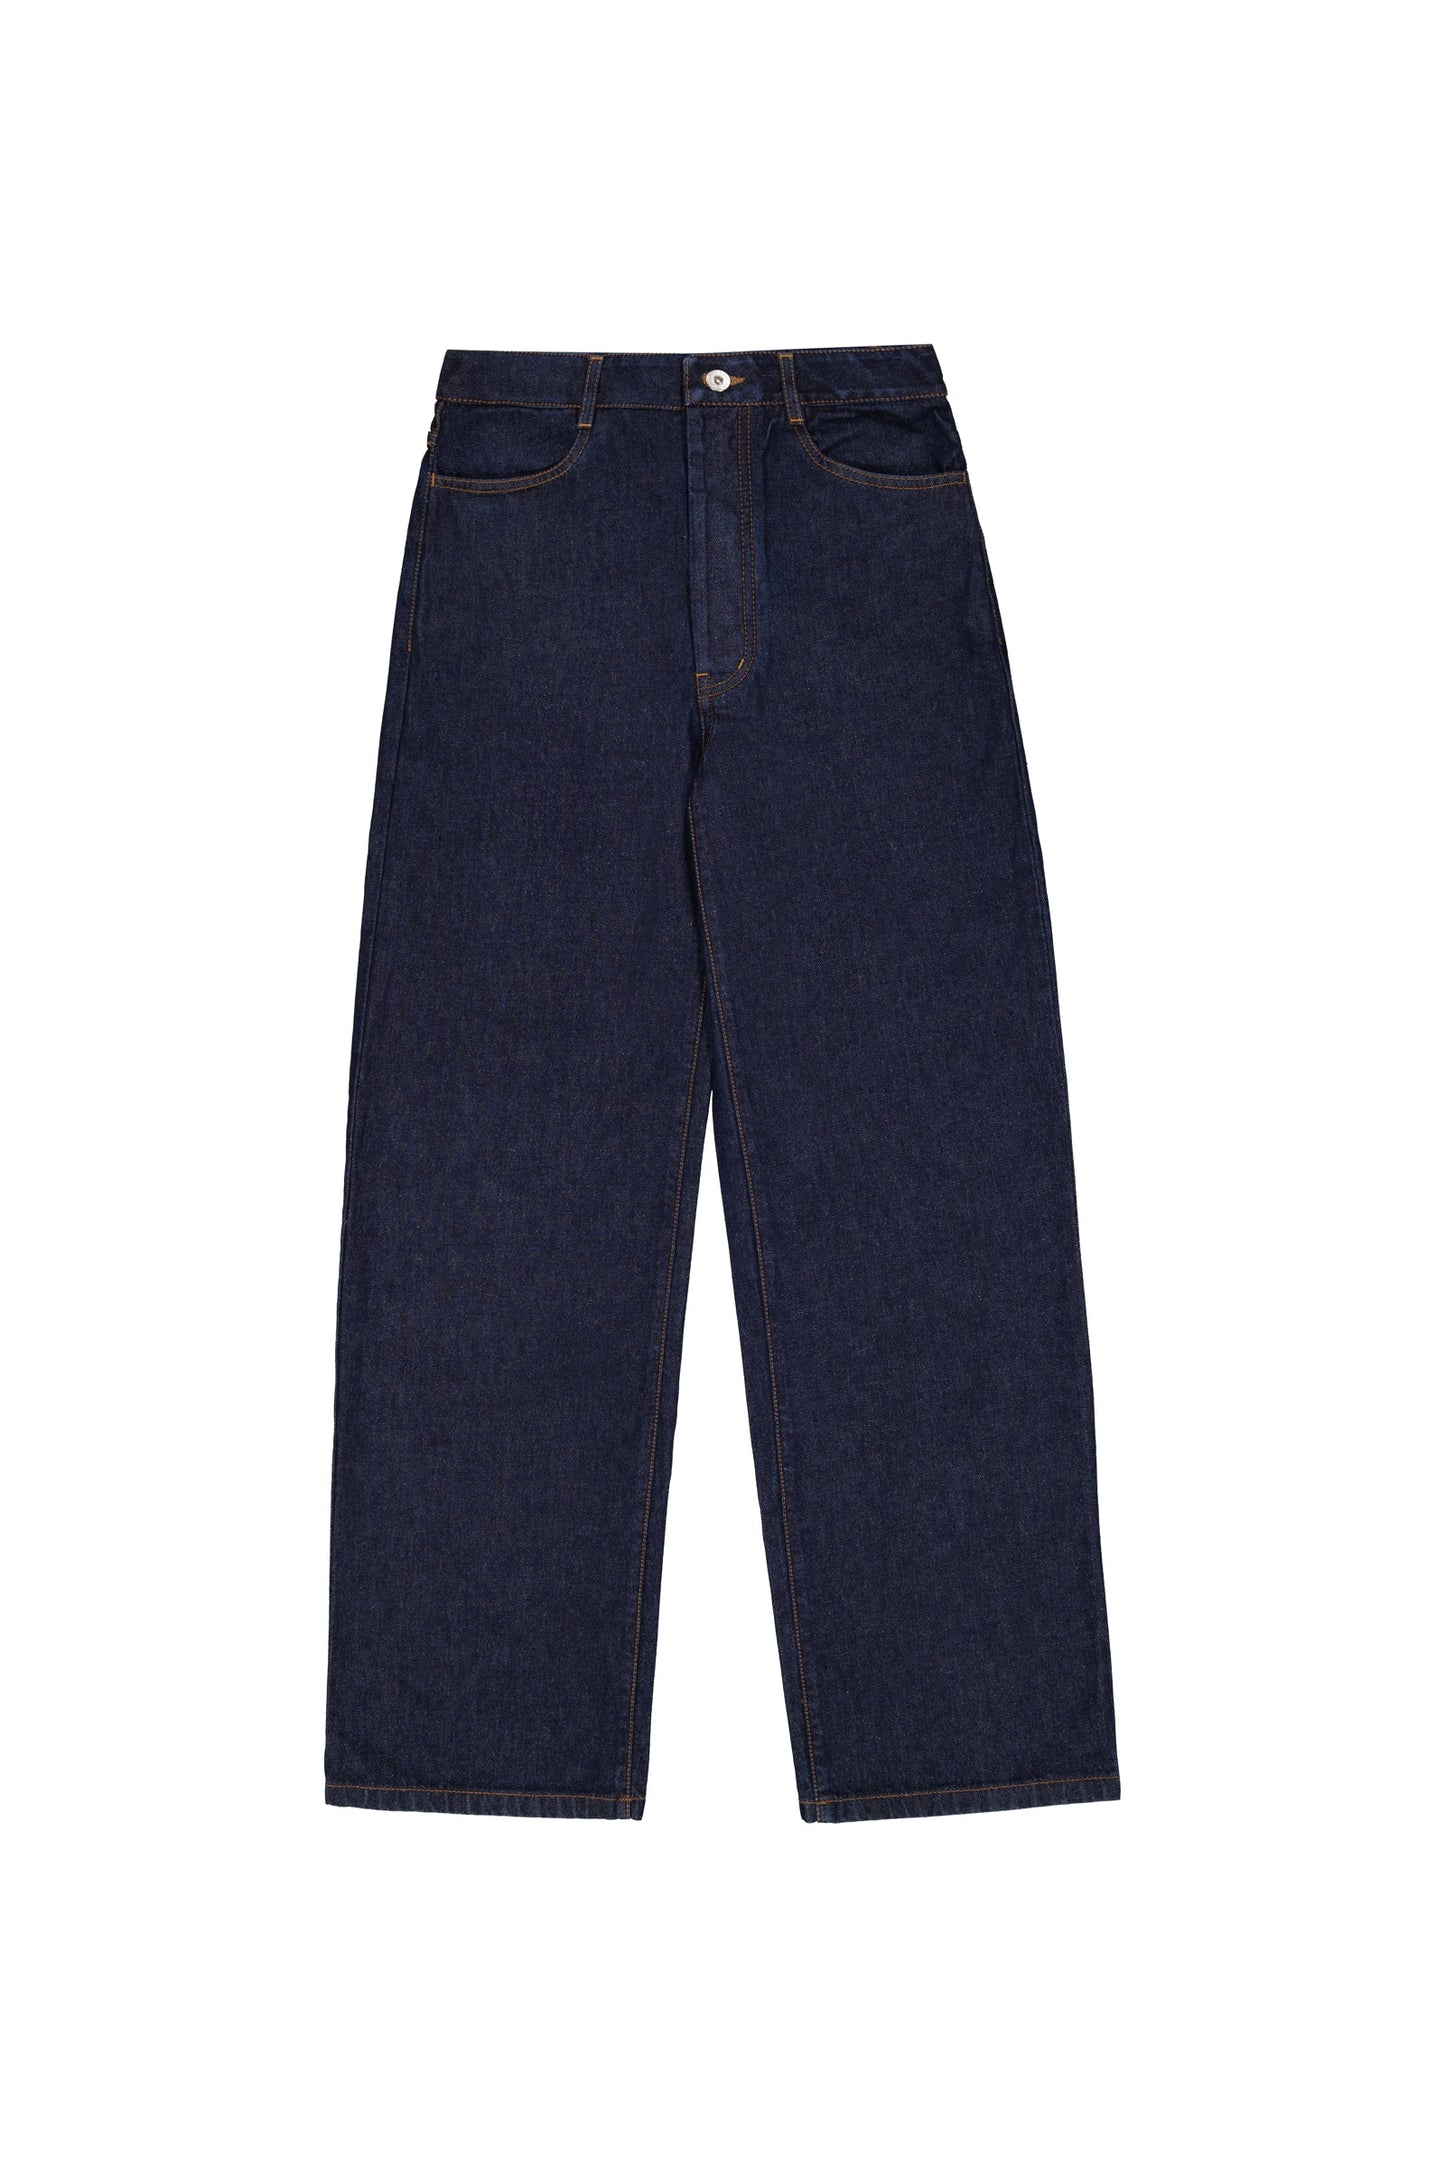 Kymaro Womens Size 11/12 Medium Wash High Rise Straight Leg Denim Jeans